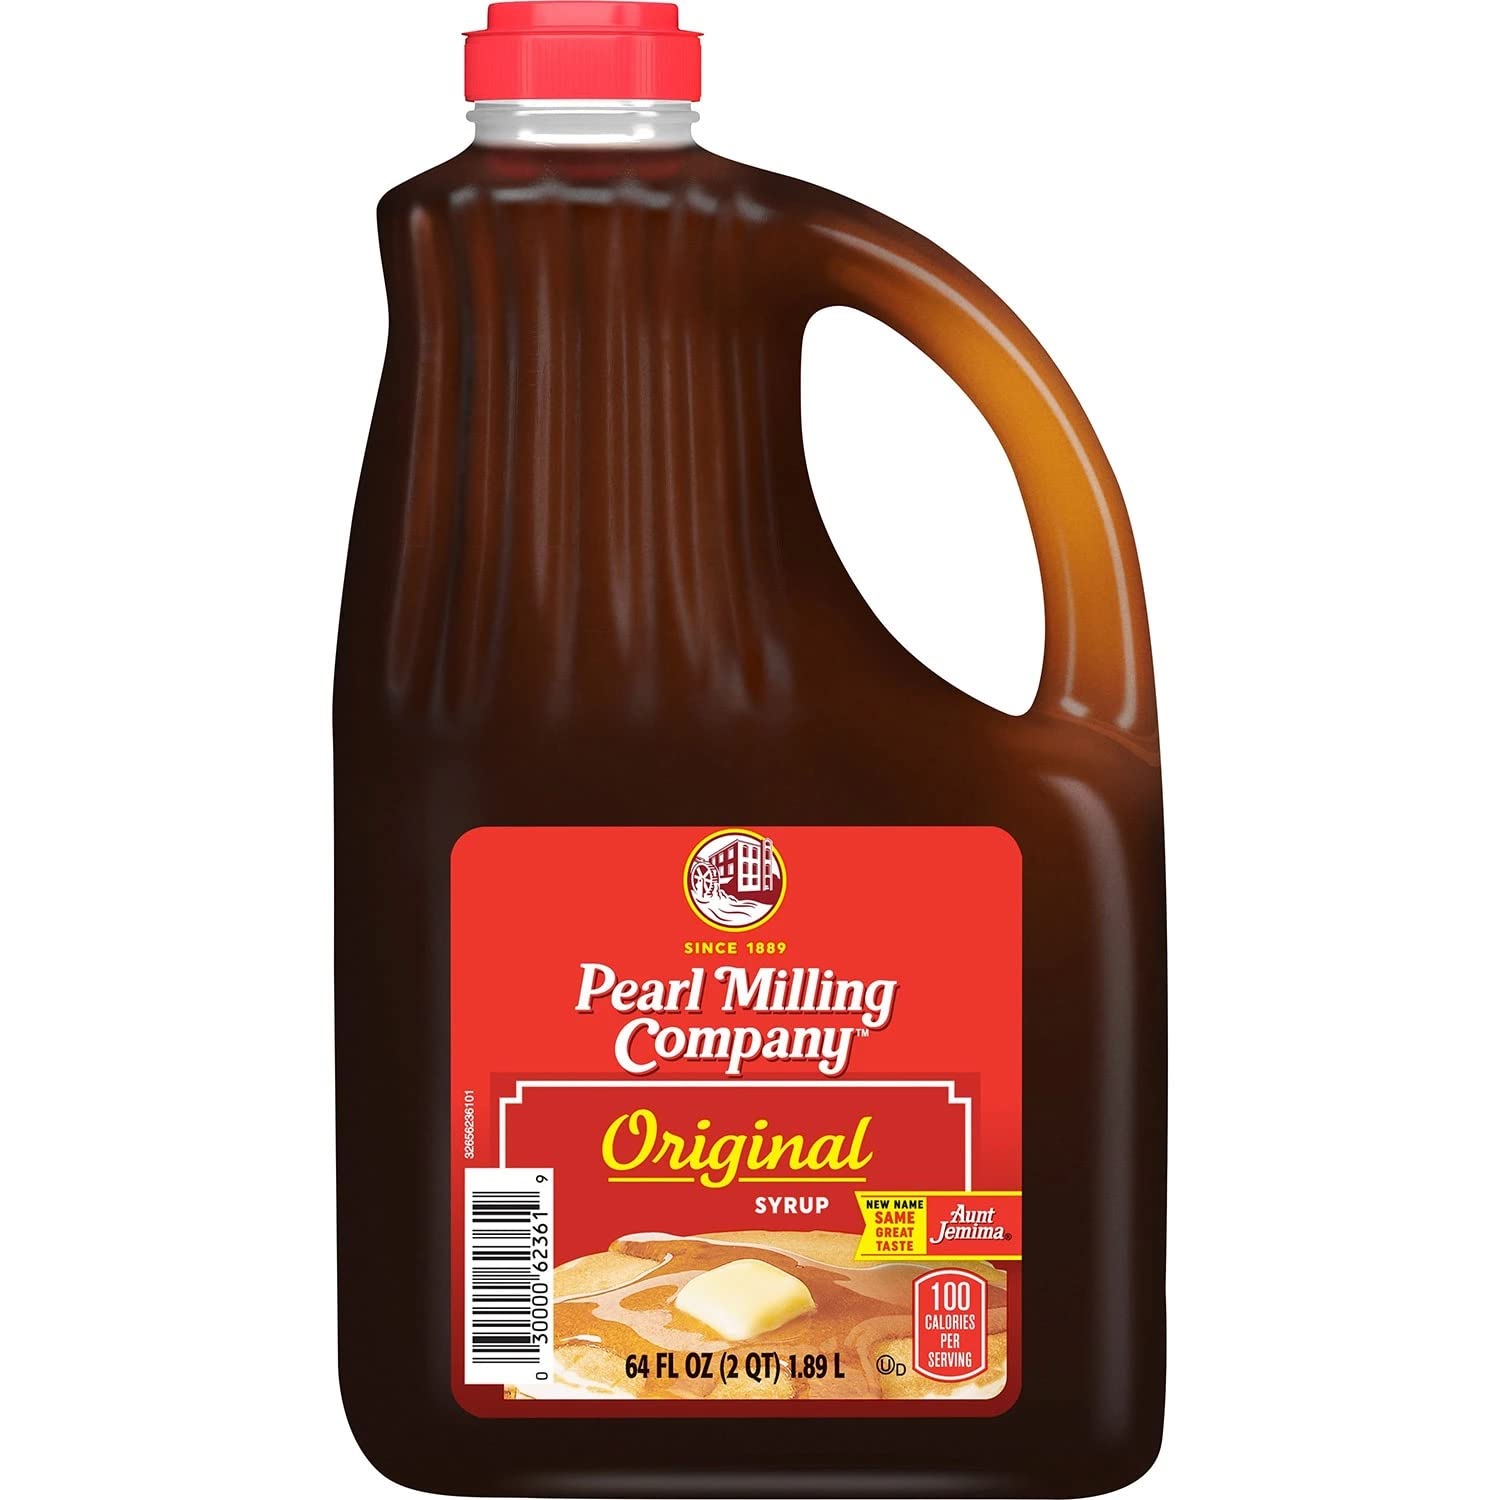 Sirop Original Pearl Milling Company, 1,89L – 1